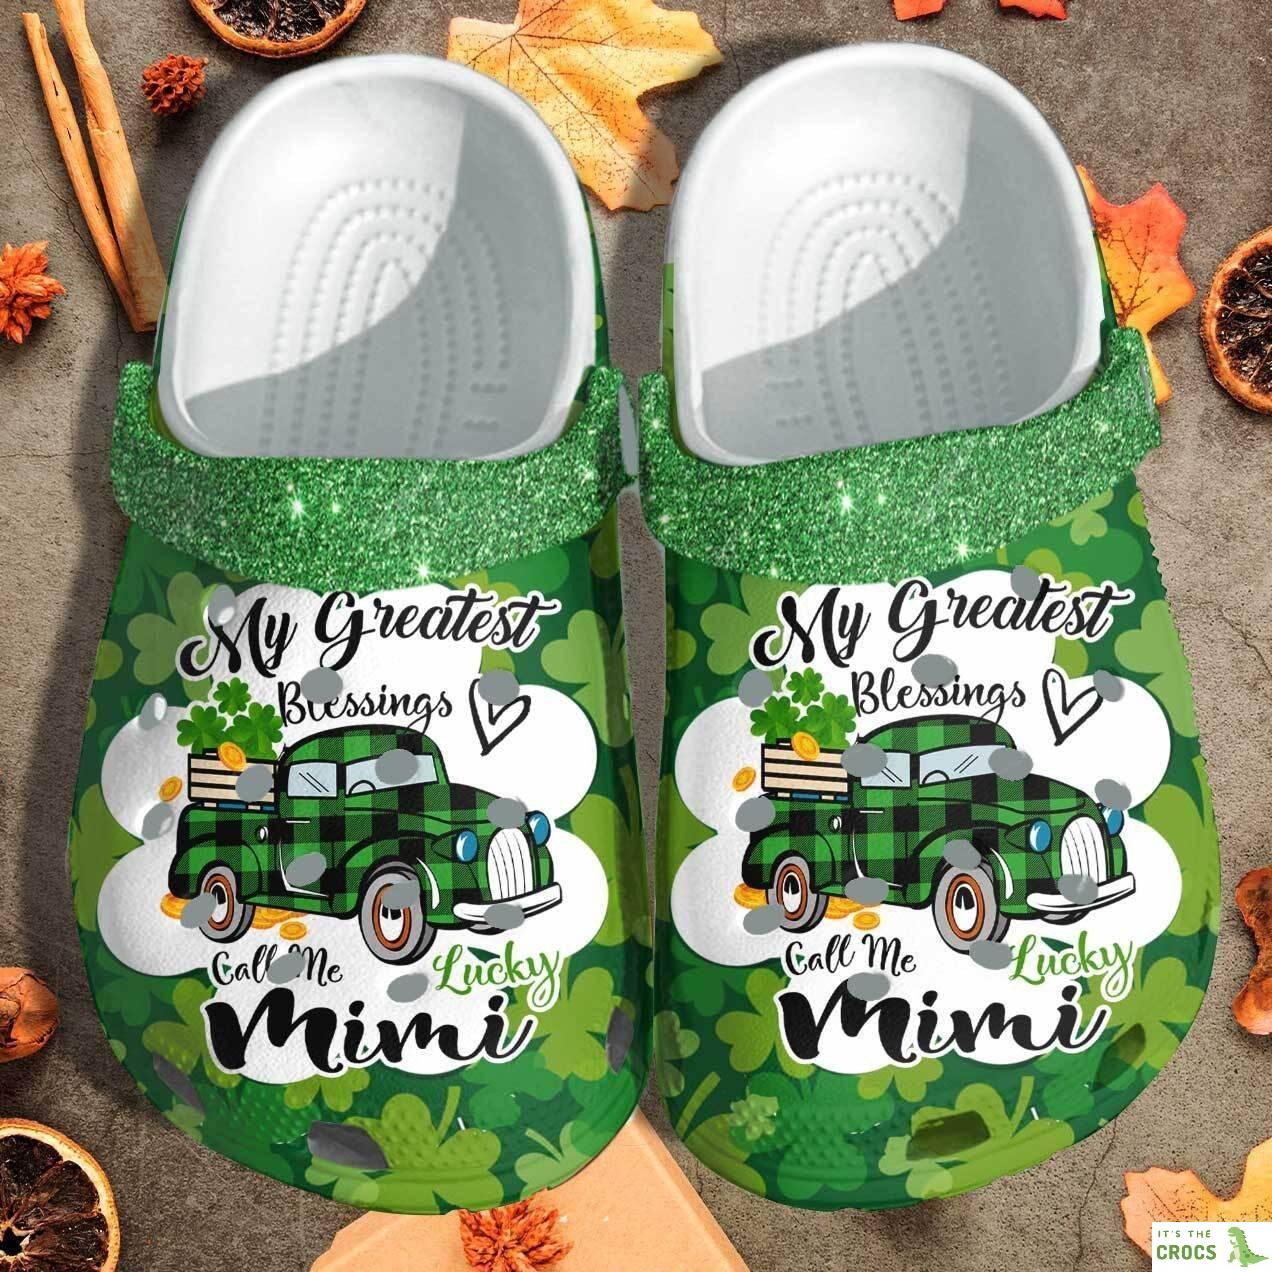 Lucky Mimi Blessings Patricks Day Crocs Shoes – Irish Crocs Shoes Merch 2022 clogs Gifts